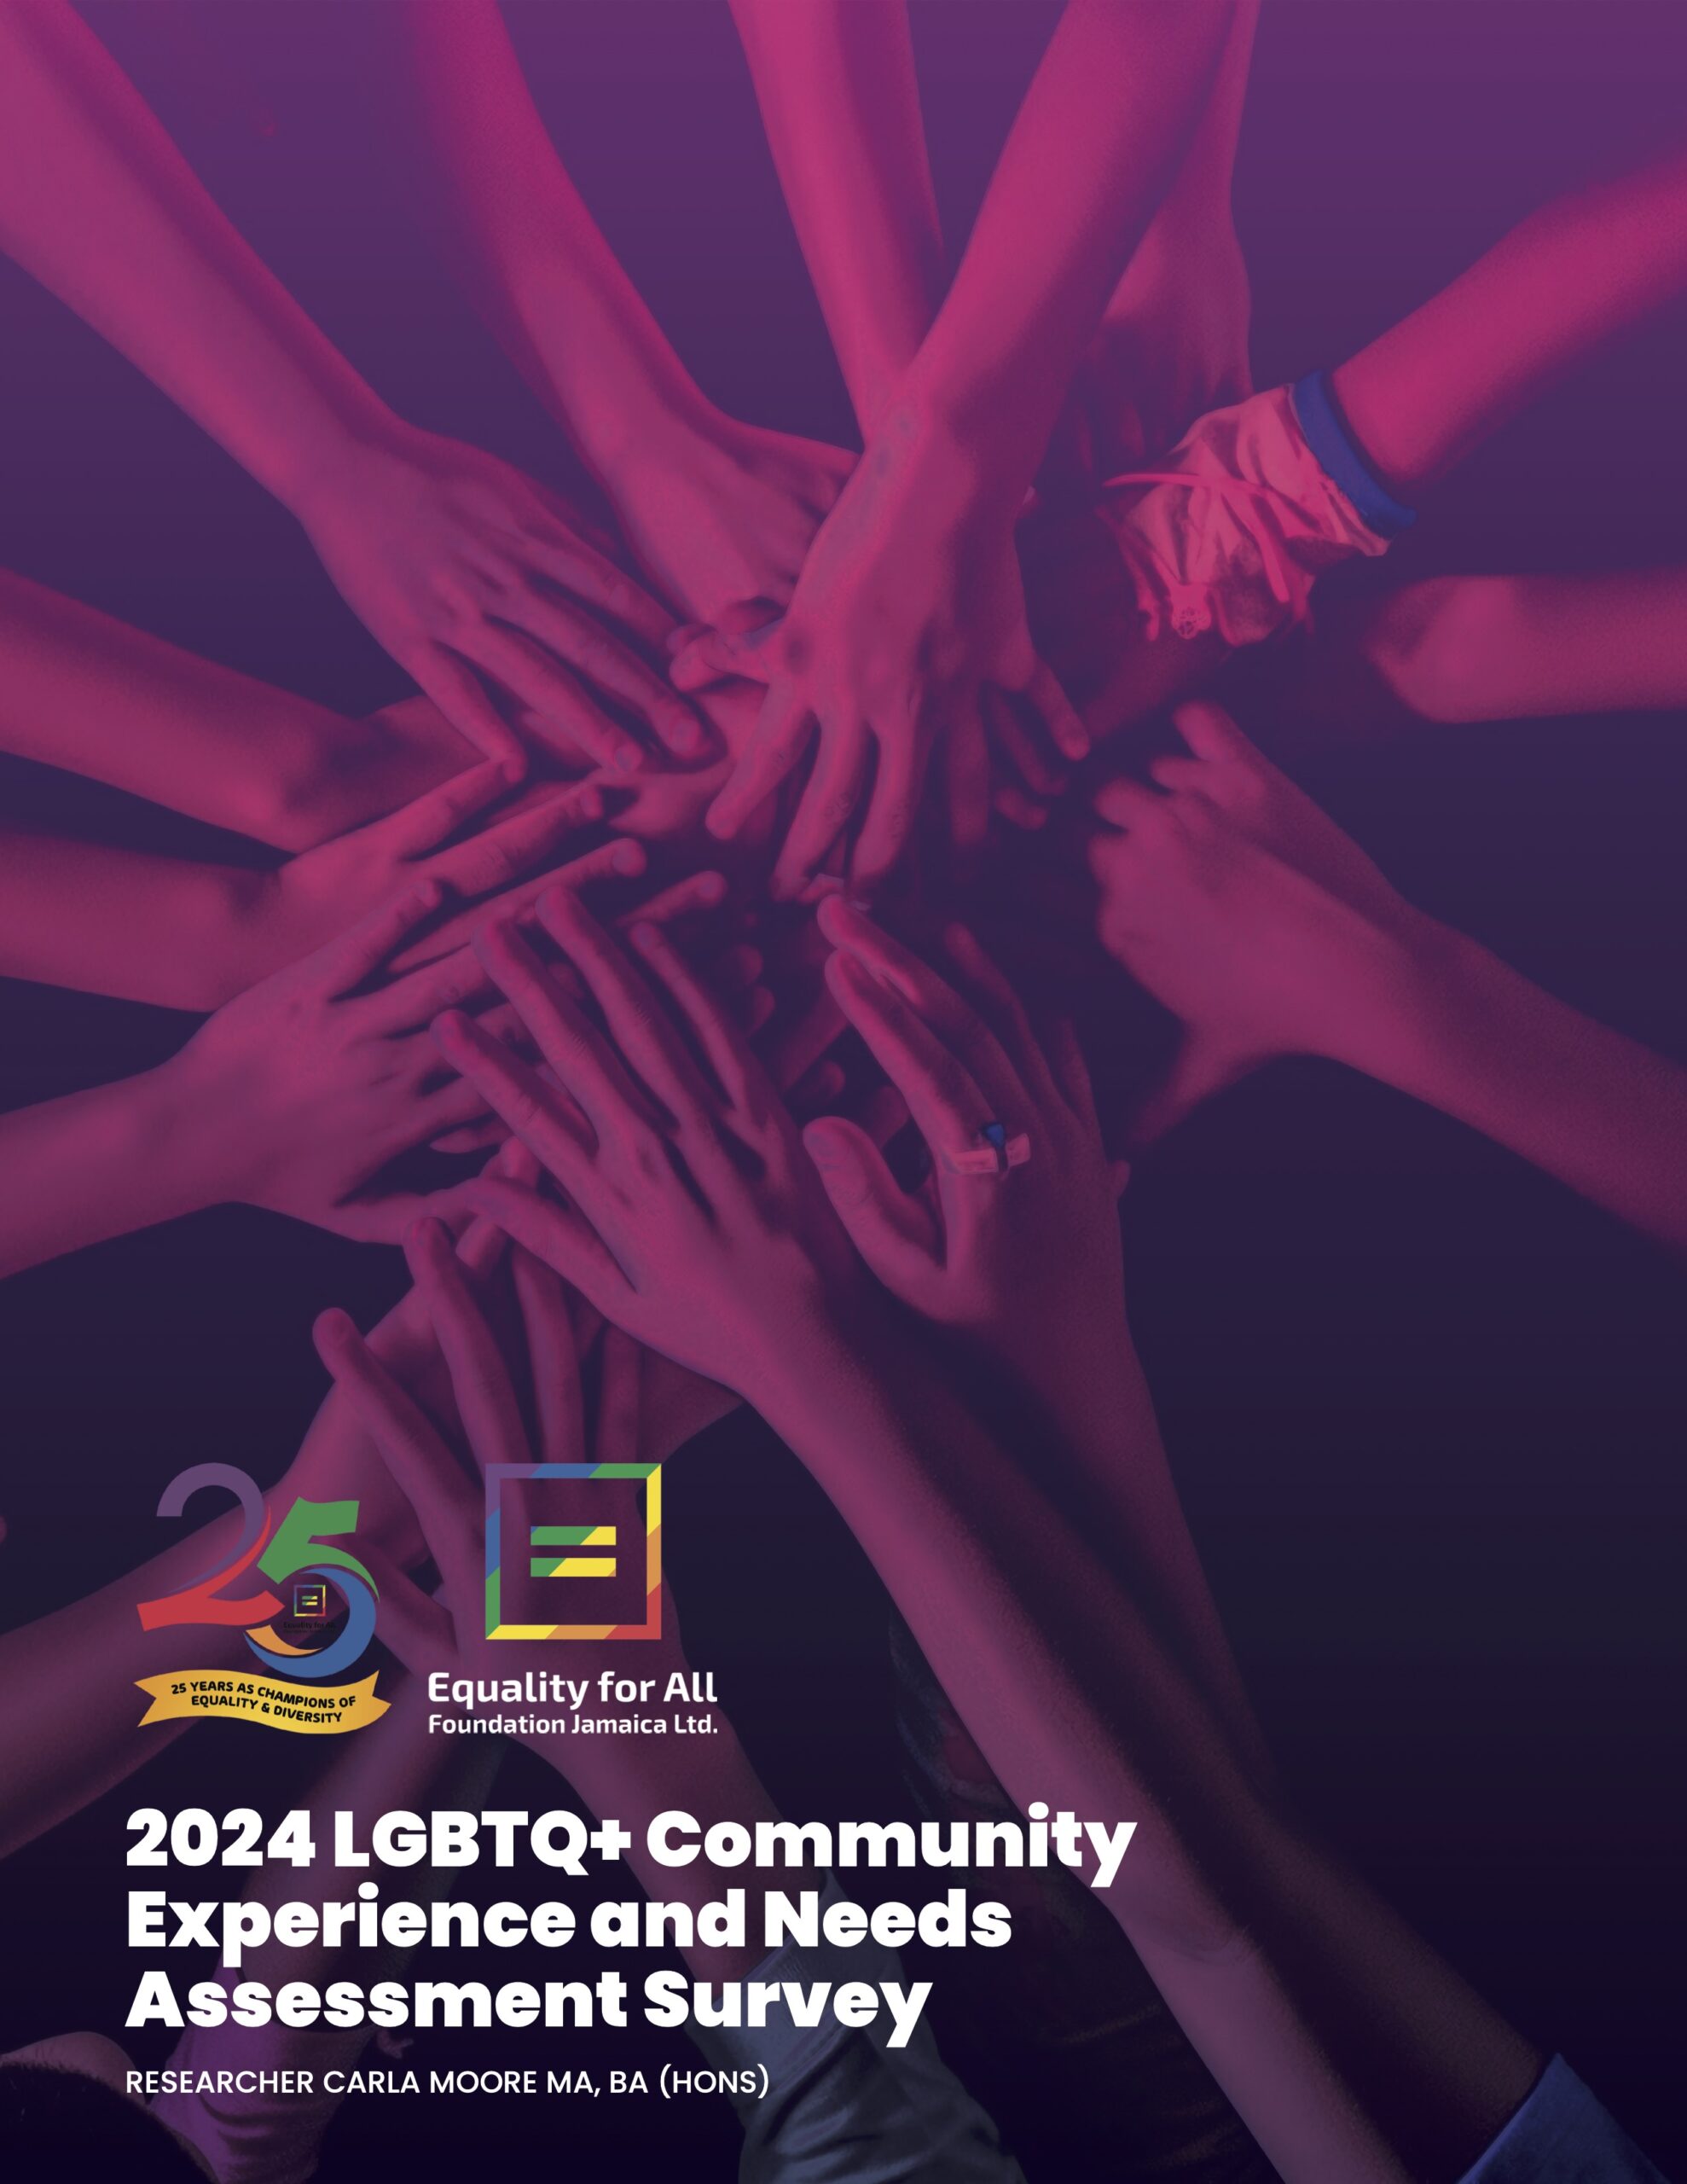 LGBTQ+ Needs Assessment 2024